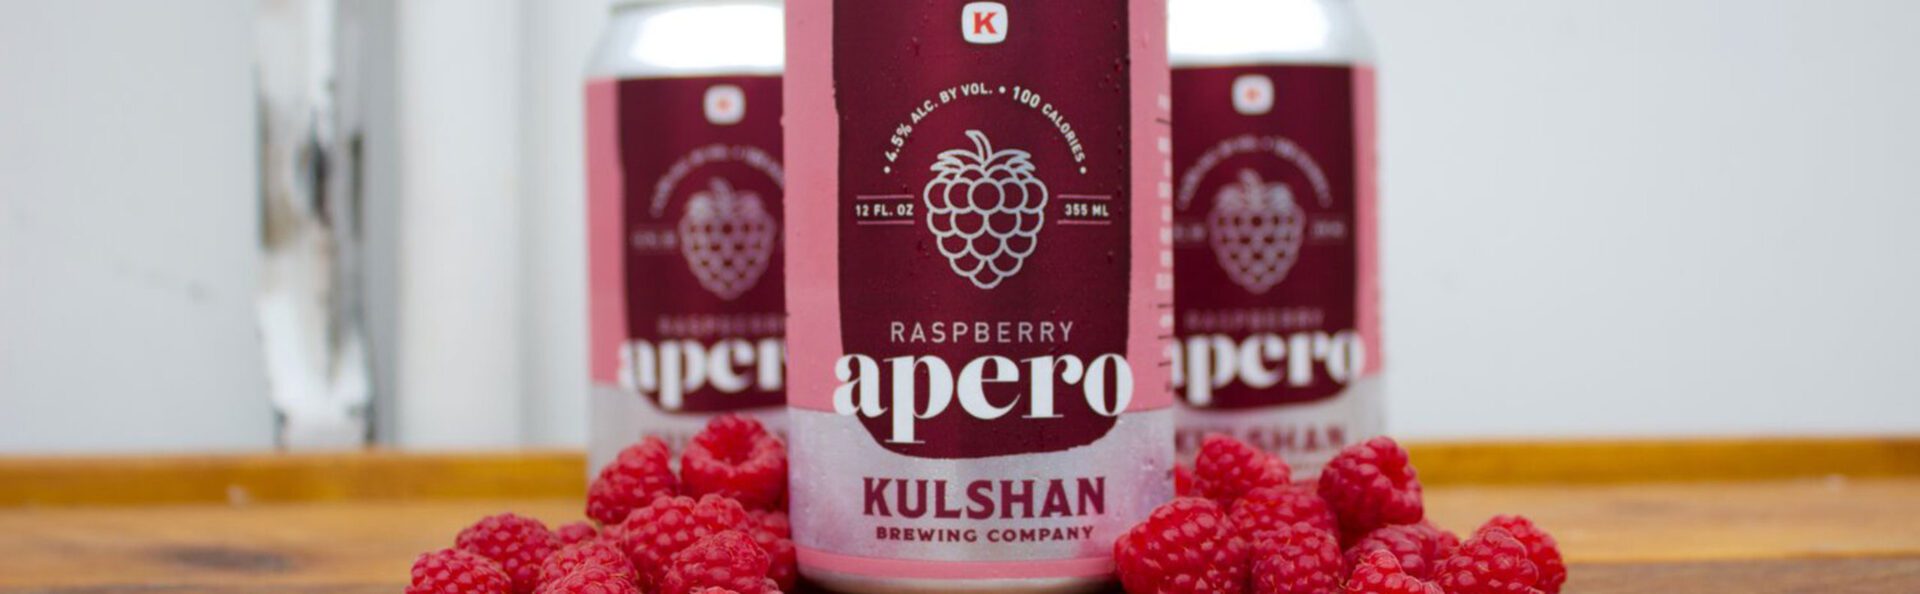 A can of raspberry apero beer sitting on top of raspberries.